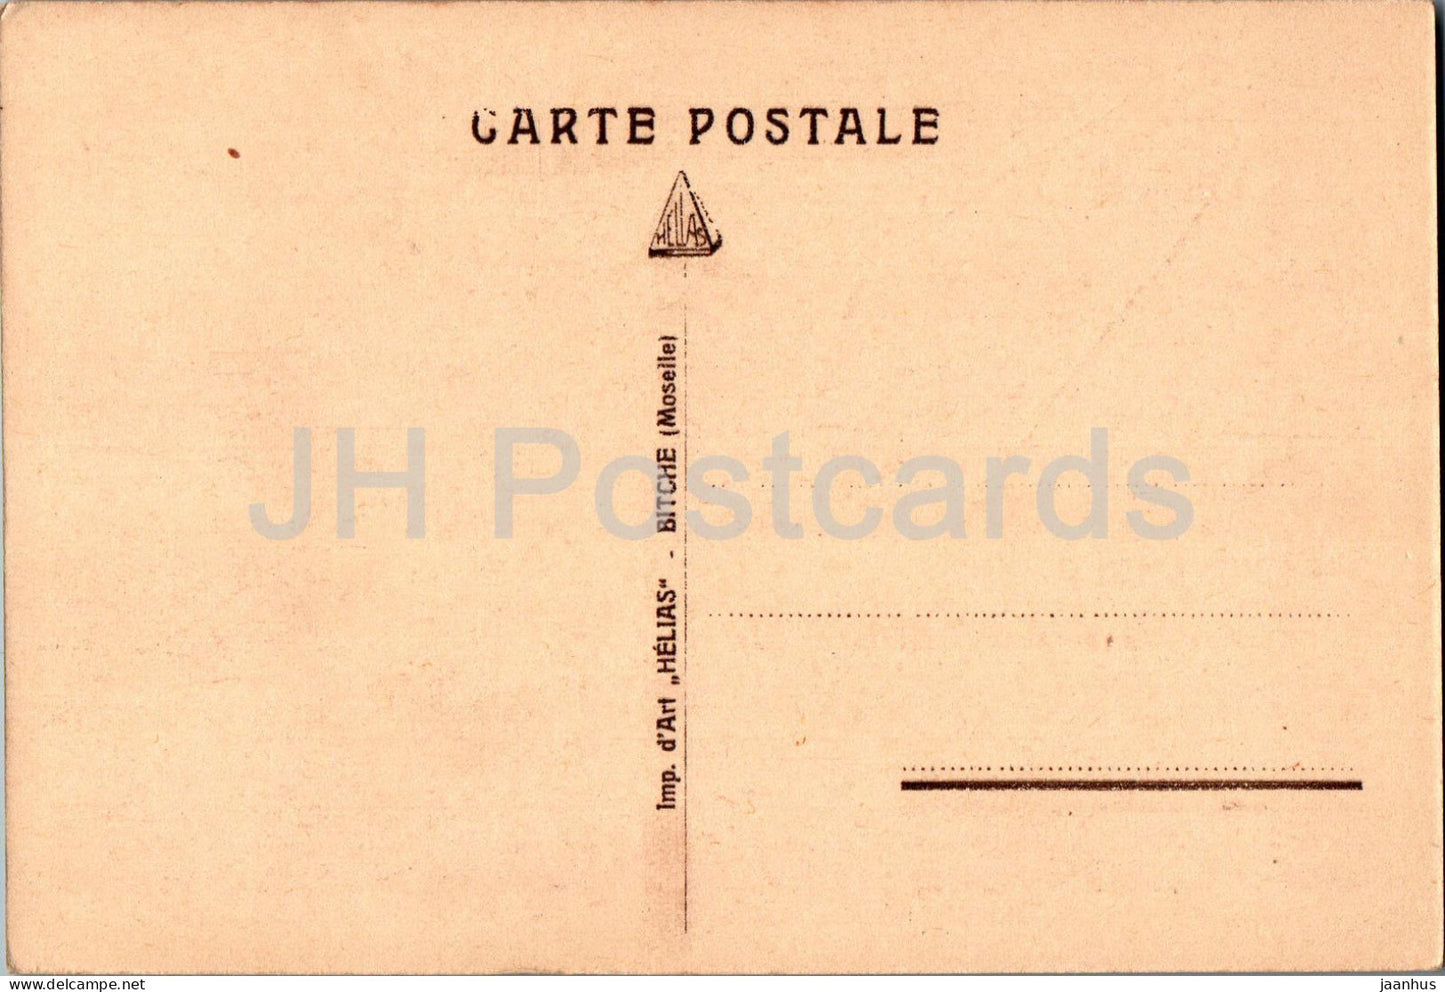 Col du Bonhomme - Le cimetiere - alte Postkarte - Frankreich - unbenutzt 